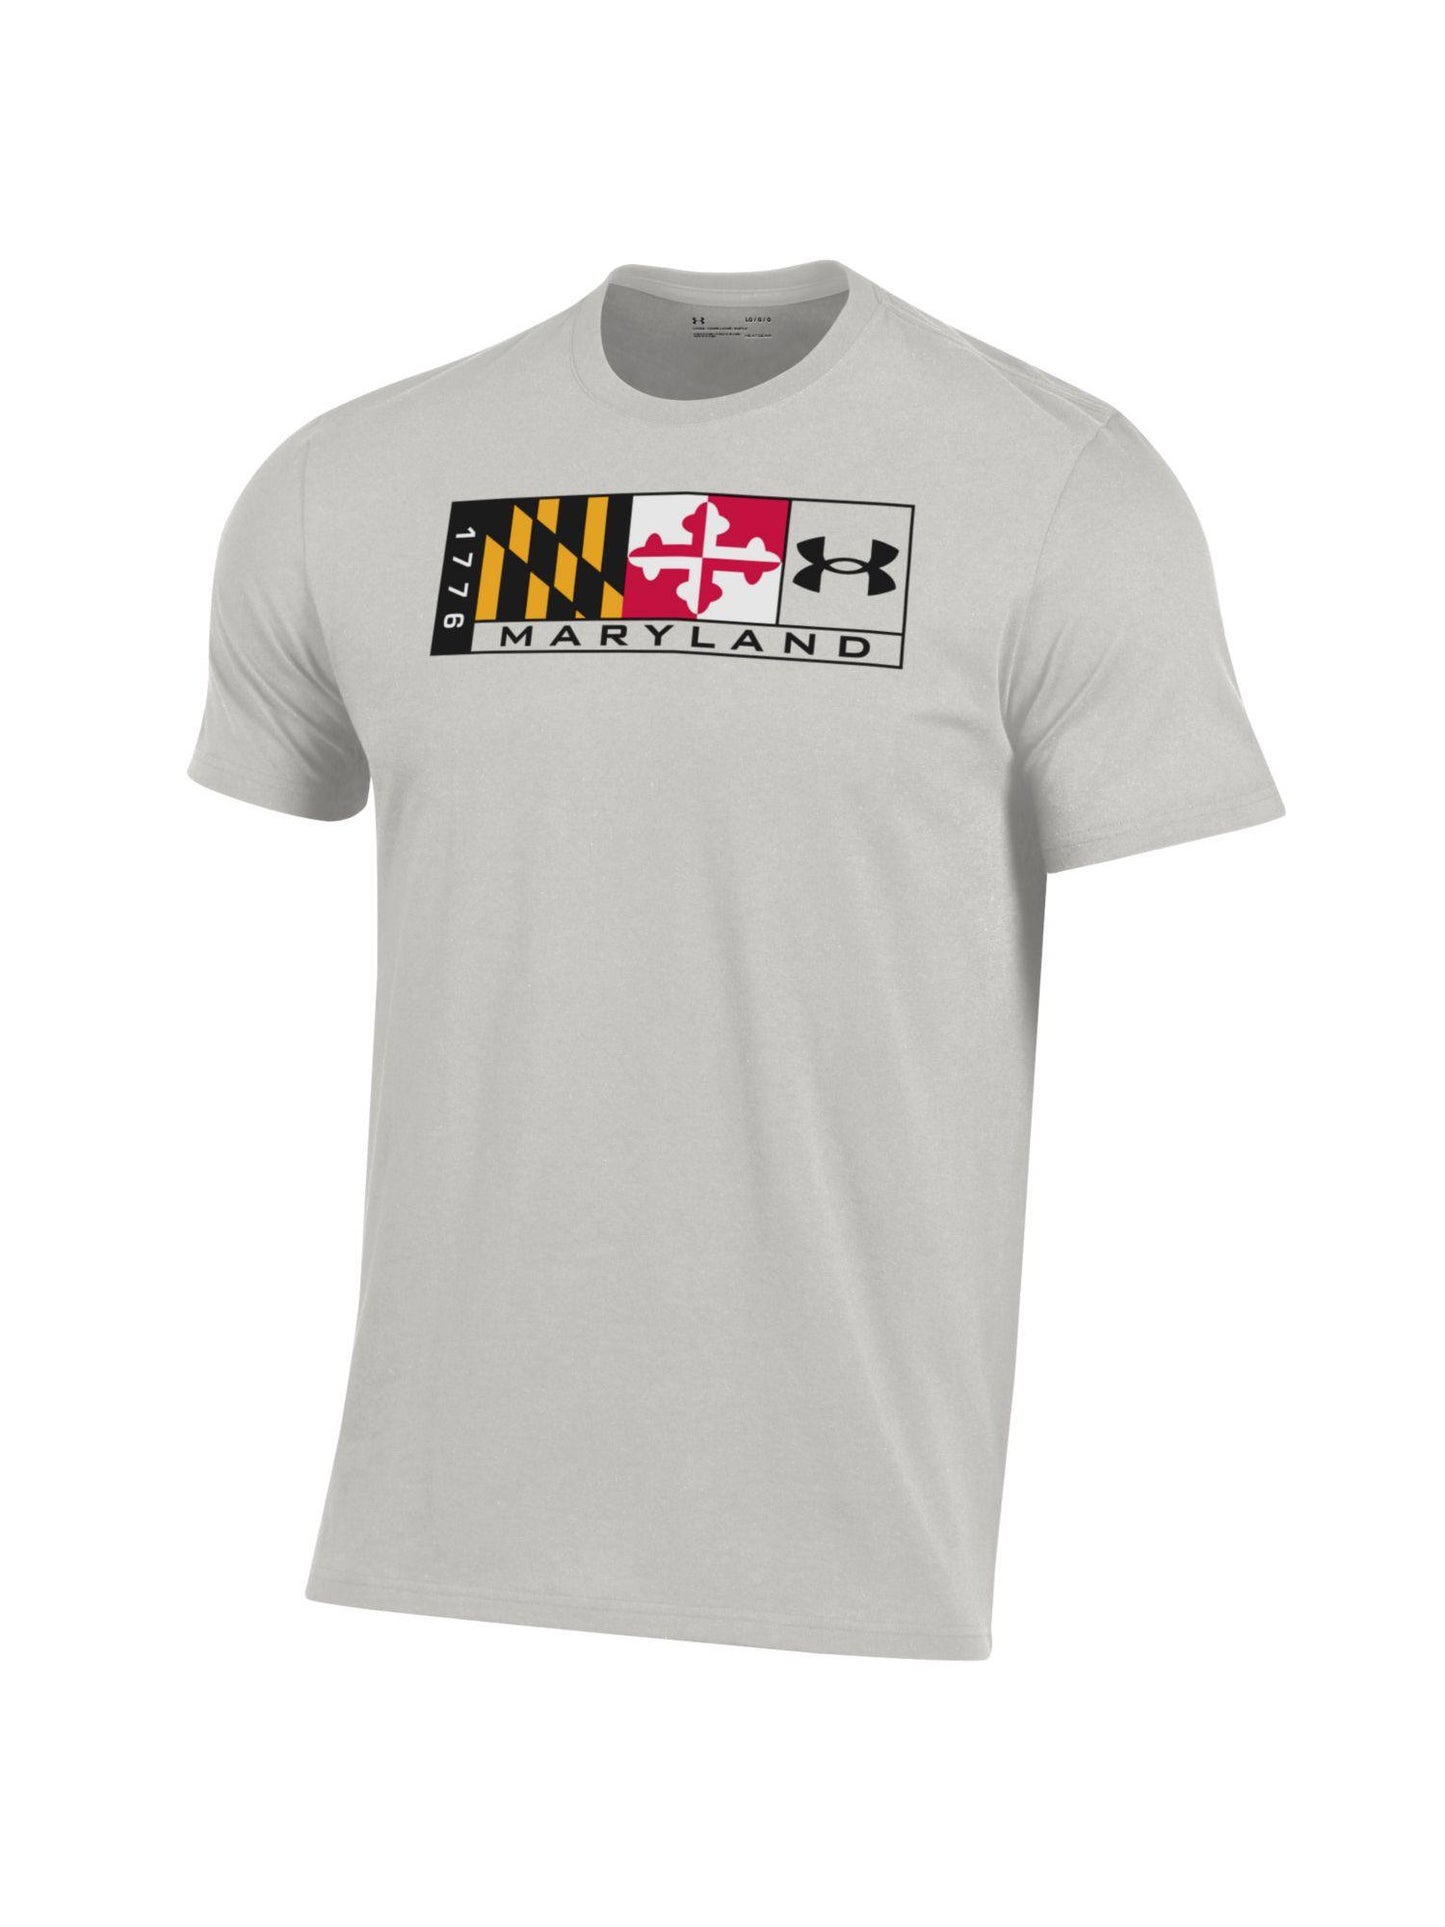 Under Armour Maryland 1776 T-Shirt (Grey)